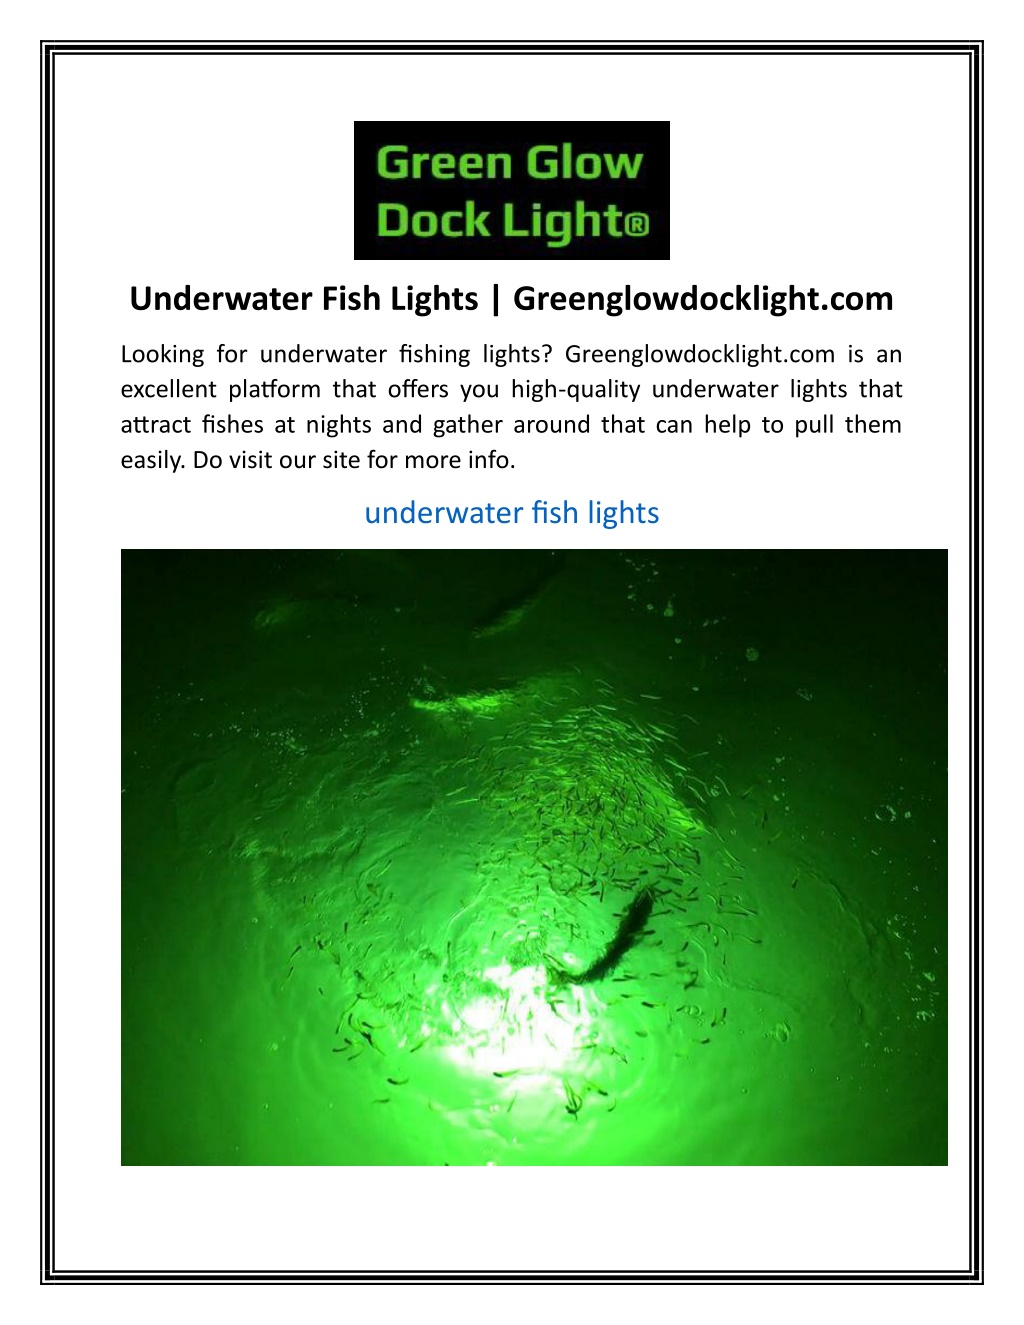 https://image7.slideserve.com/12261014/underwater-fish-lights-greenglowdocklight-com-l.jpg